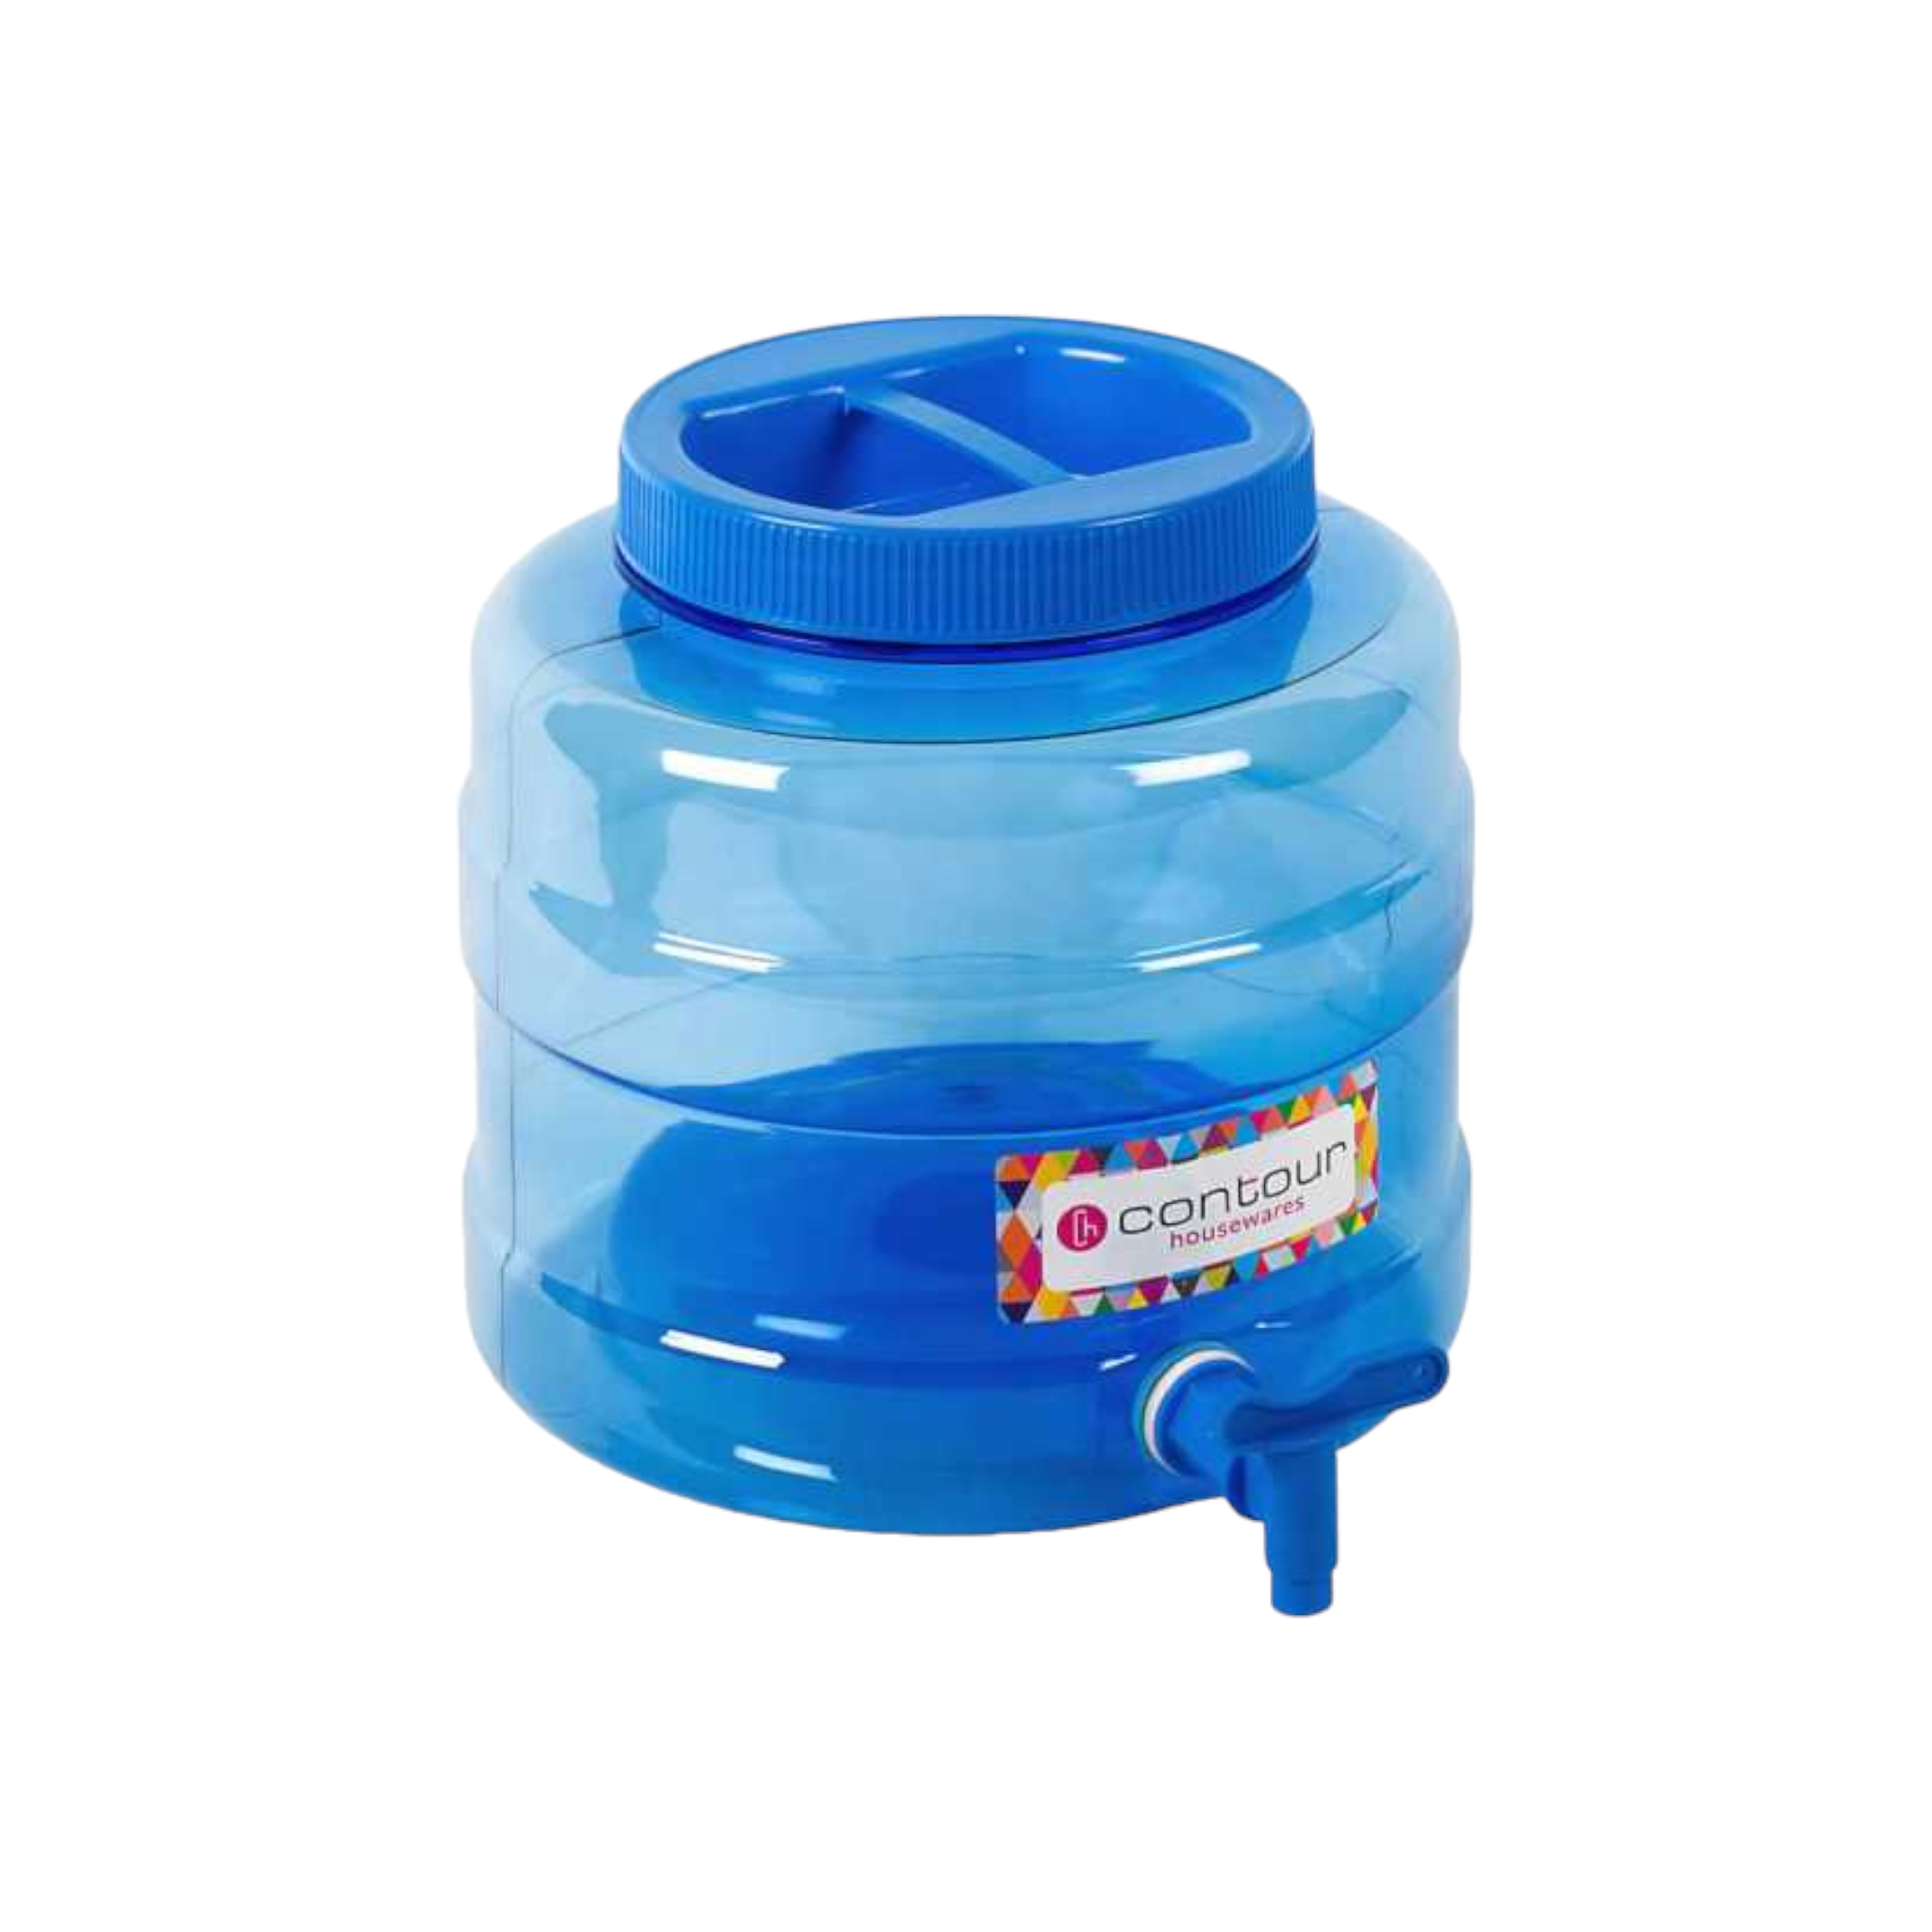 20L Water Bottle Dispenser with tap Round Blue Contour Housewares